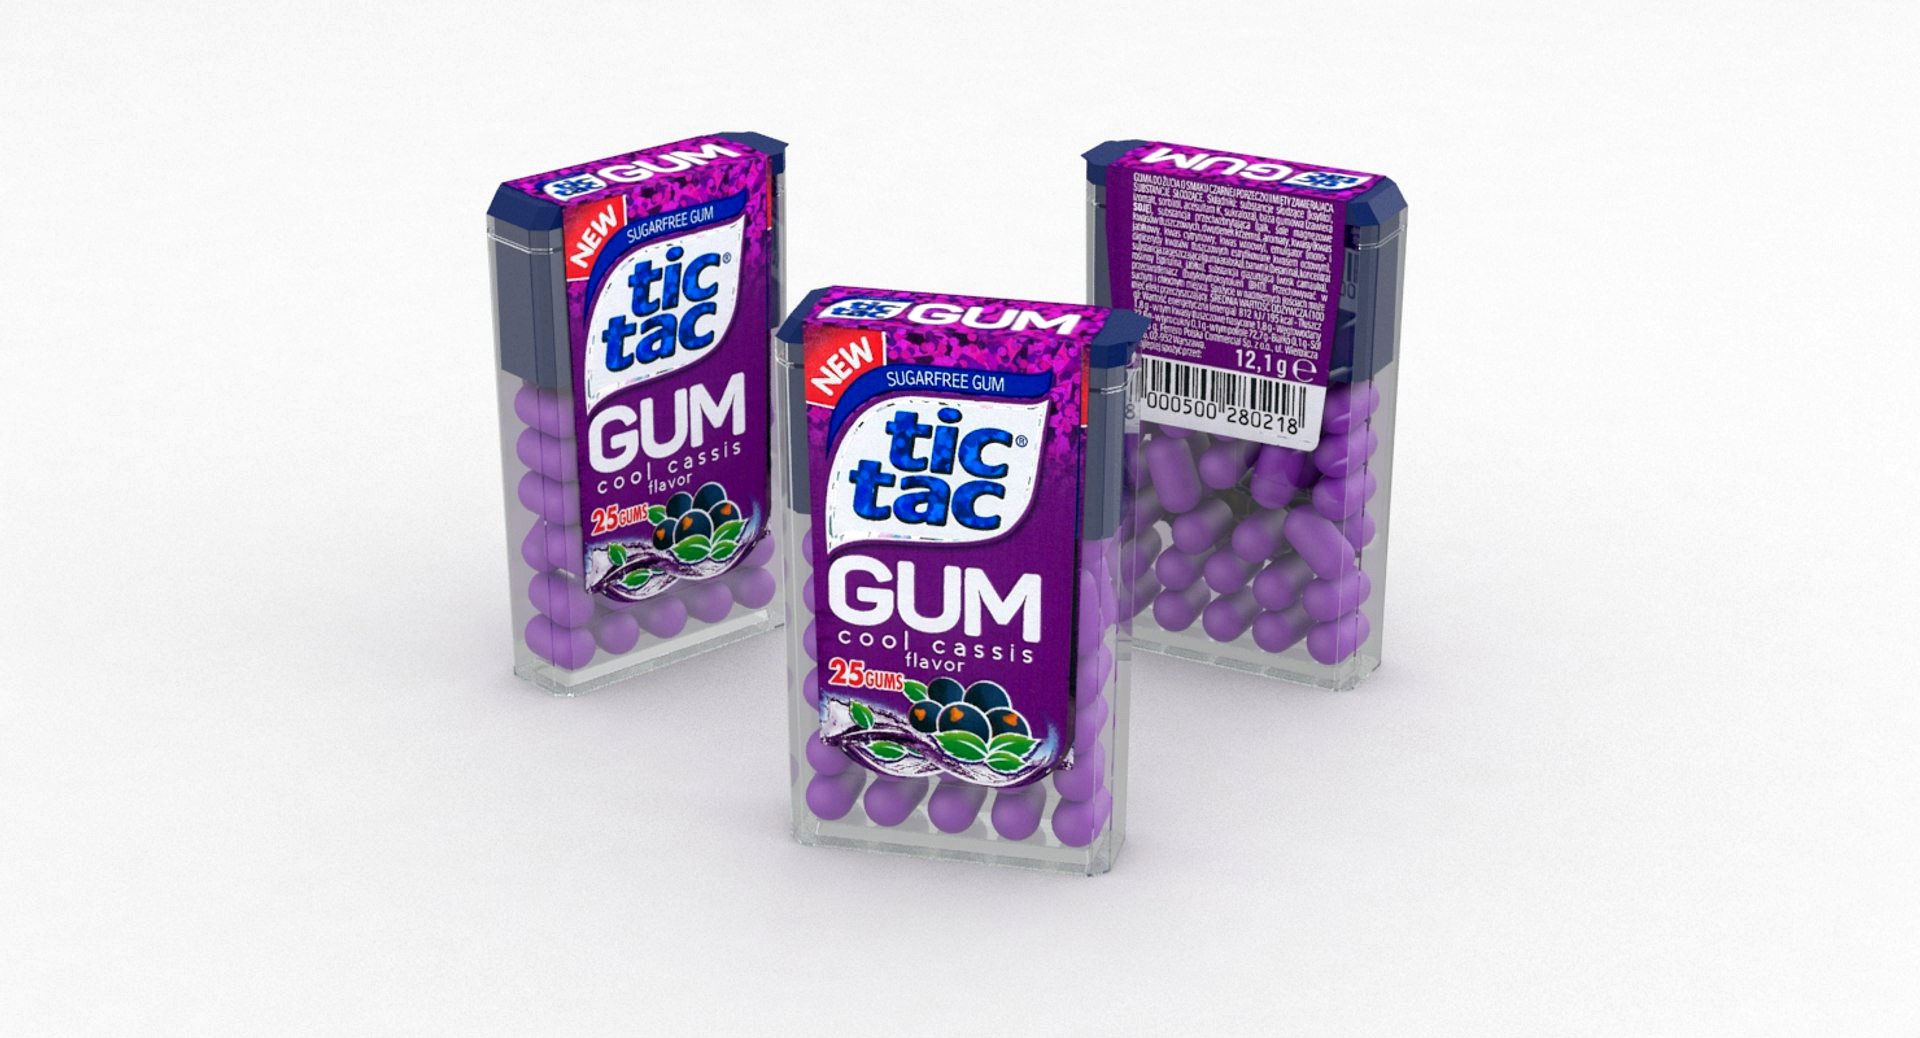 Tic Tac Gum Cool Cassis 12g